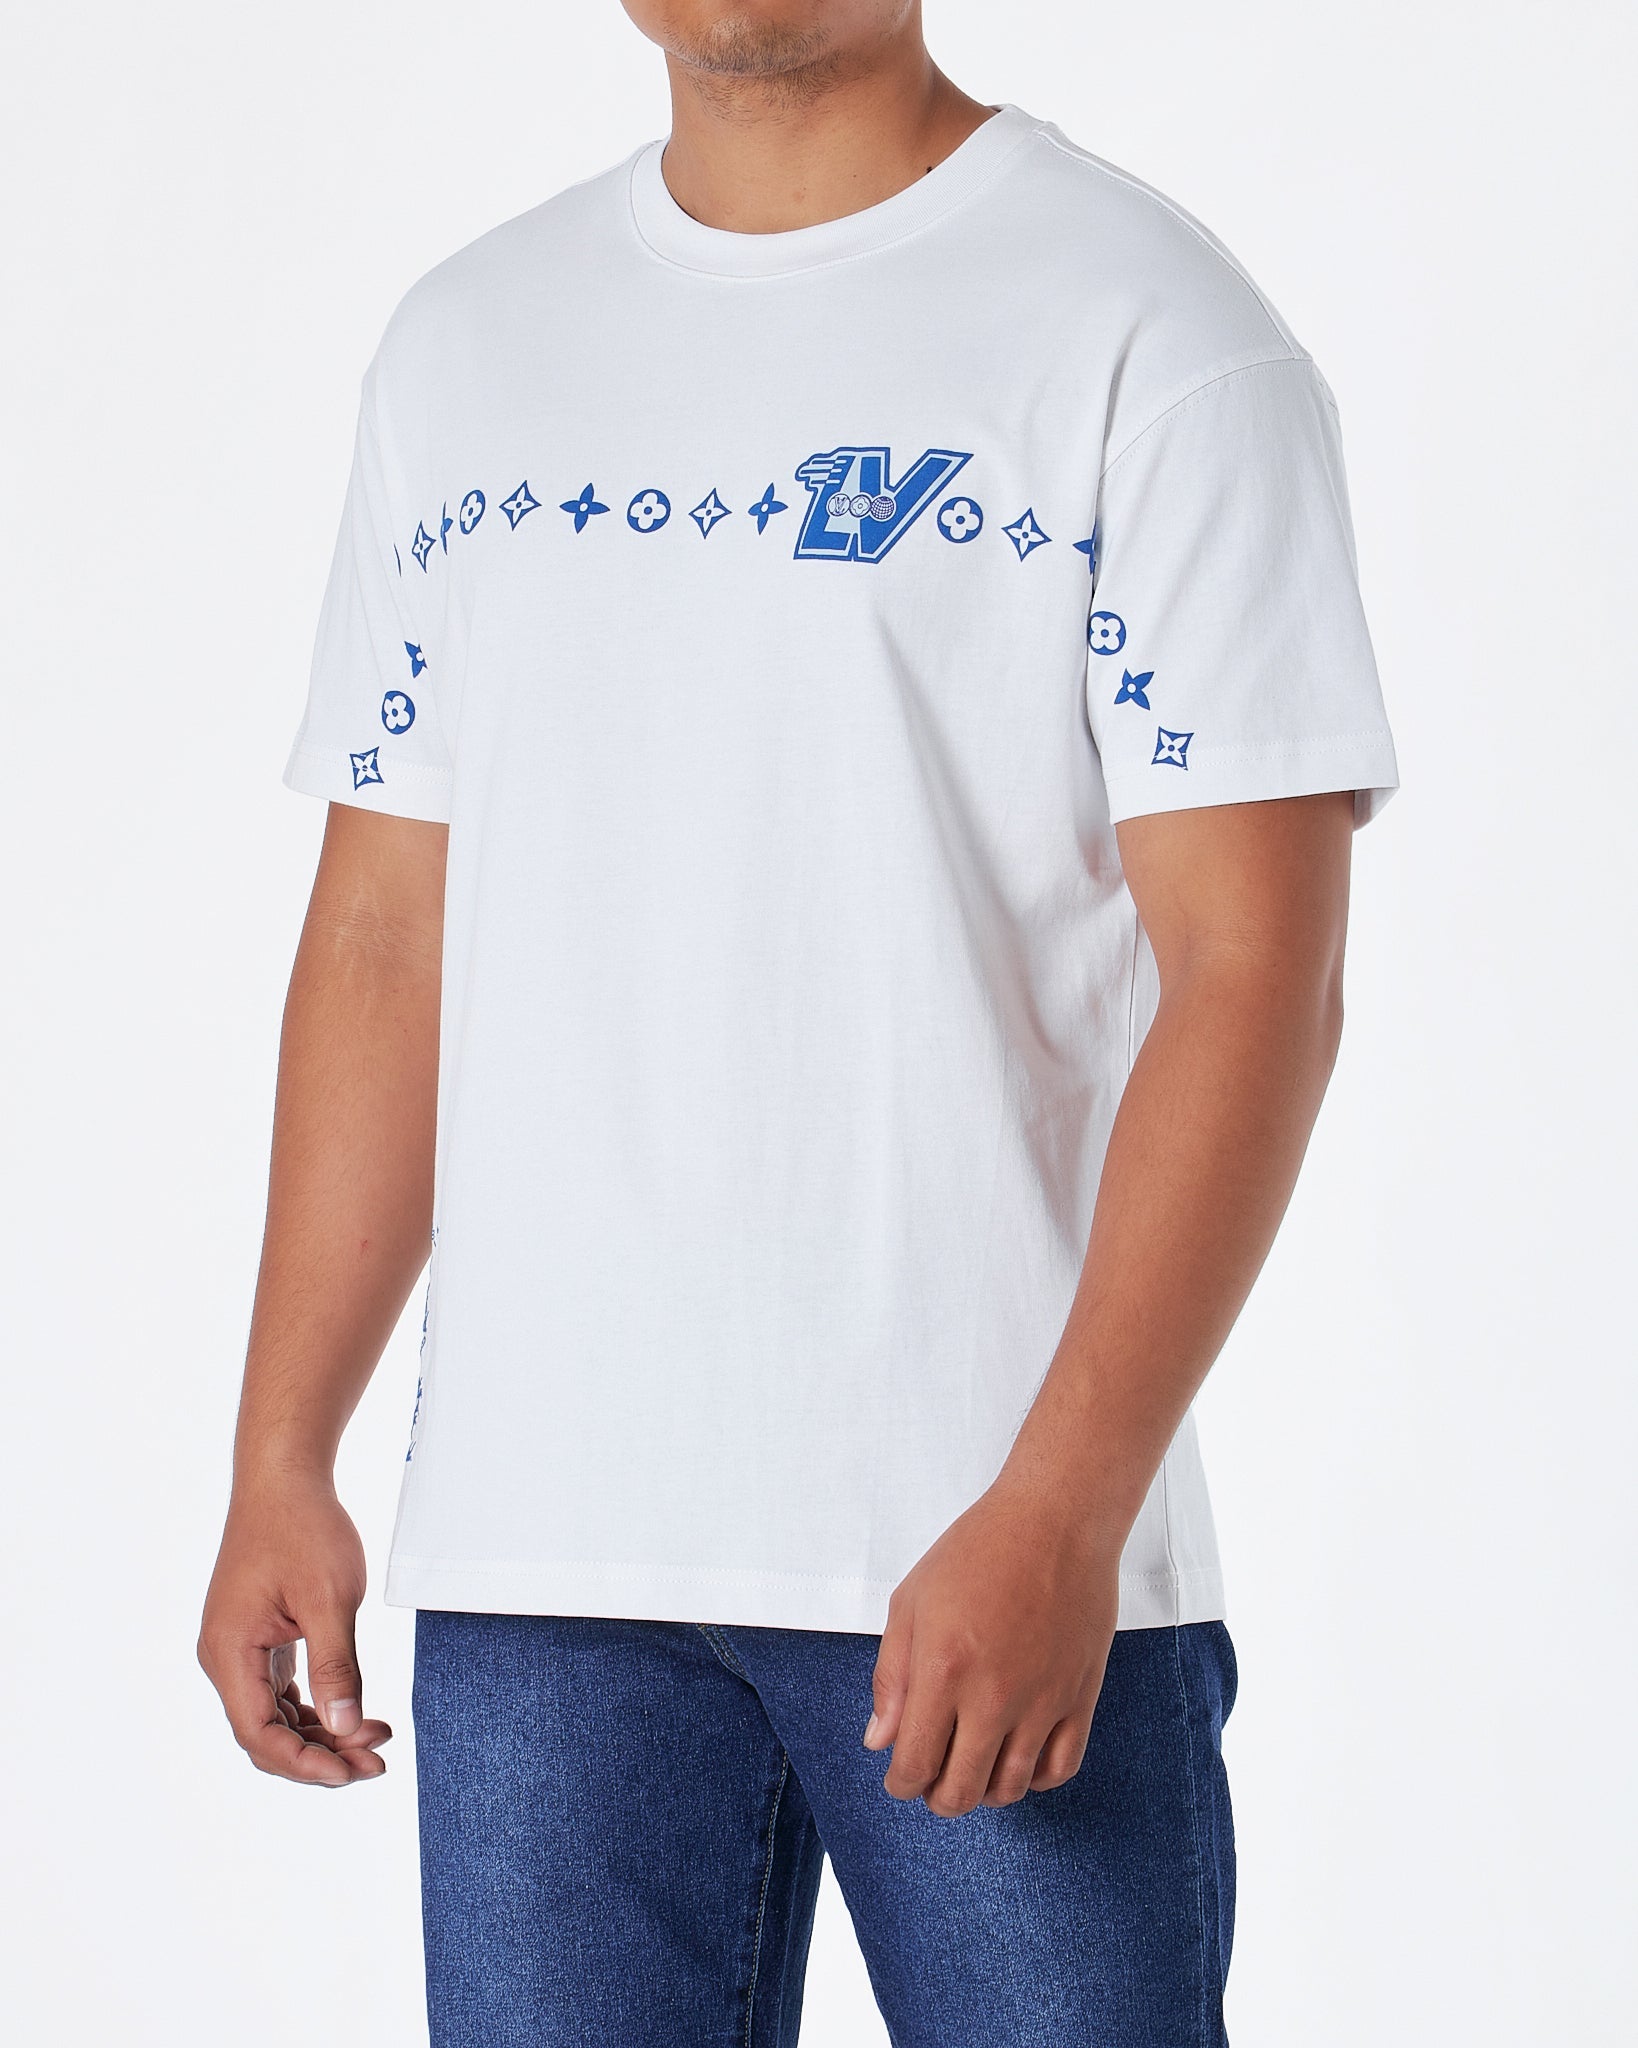 MOI OUTFIT-LV Logo Printed Men T-Shirt 49.90